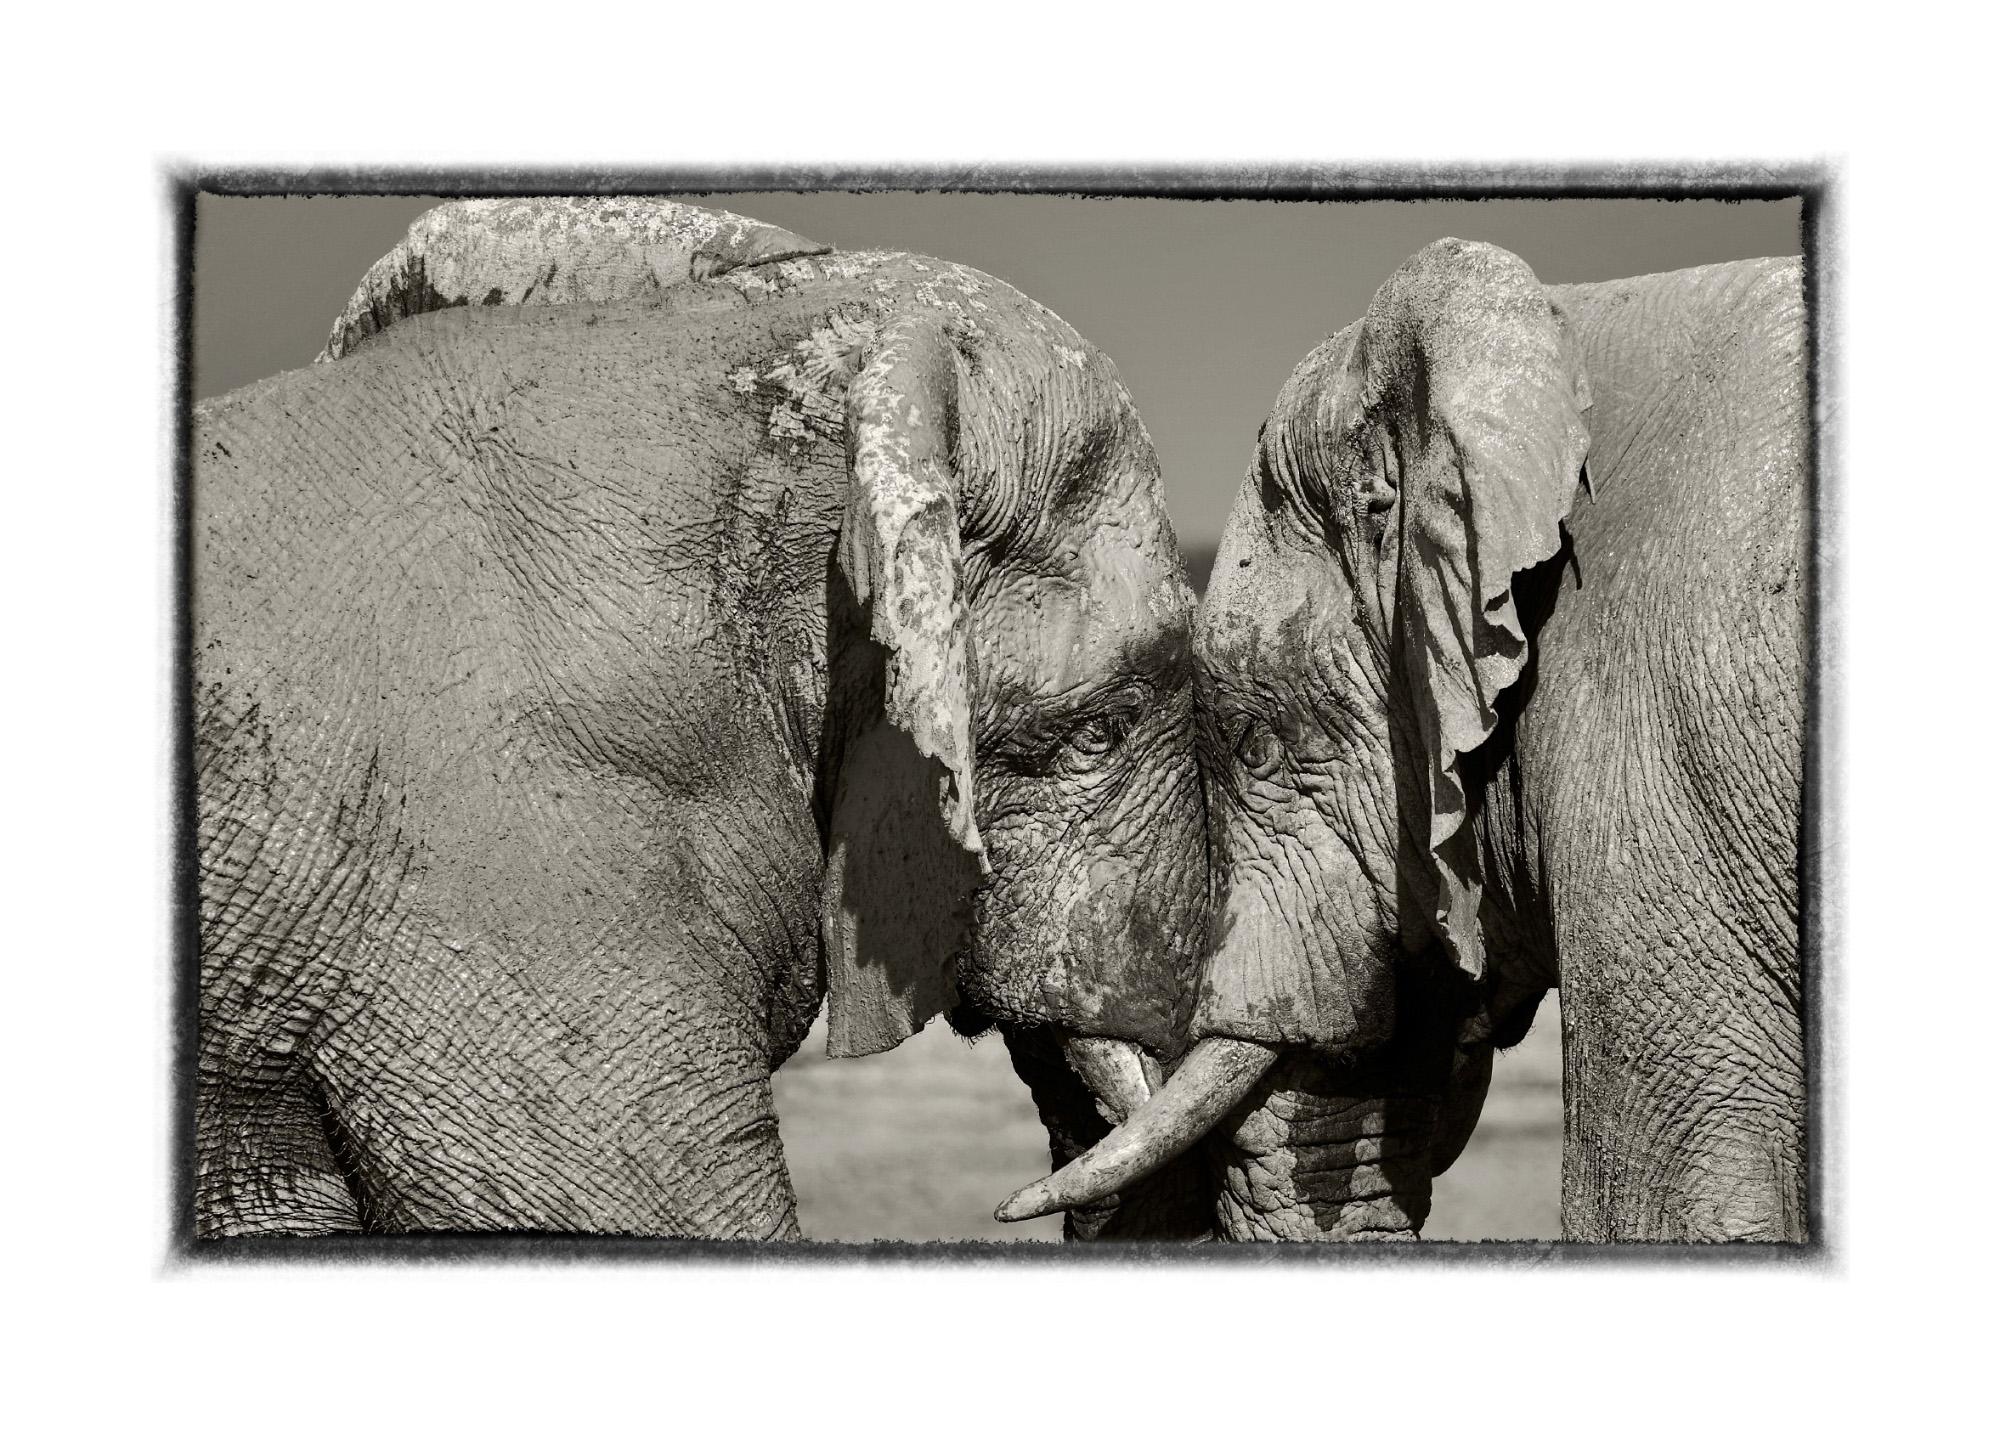 Namibian Etosha Elephants, Black and White Photography, Fine Art Print by Rainer Martini For Sale